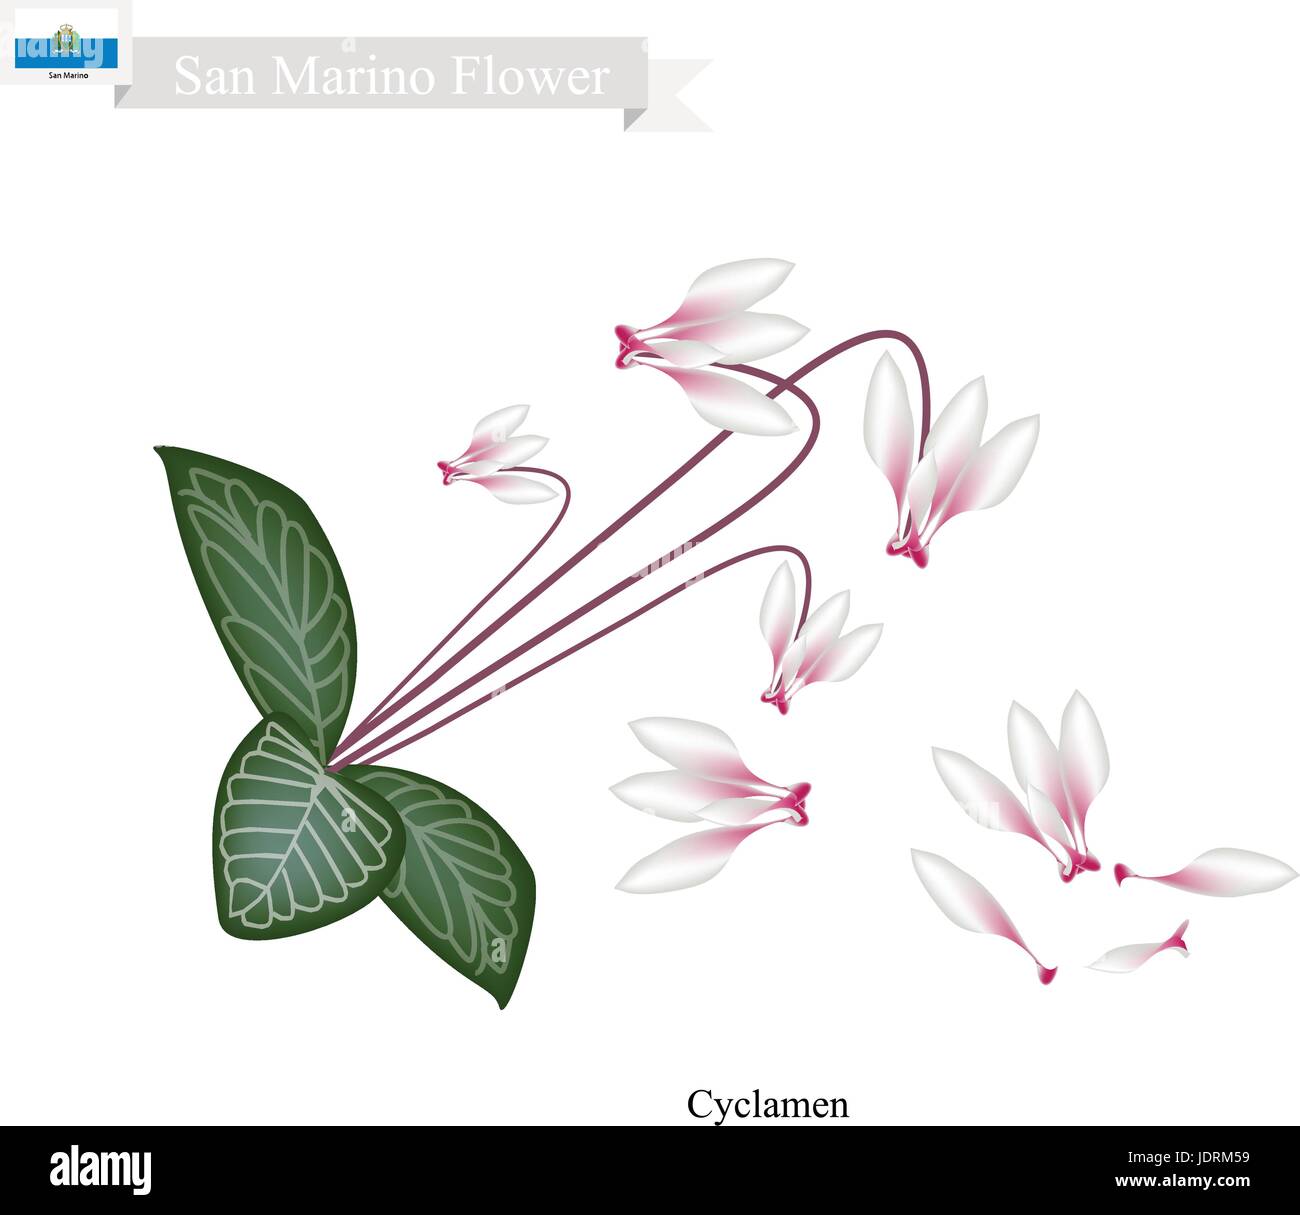 Sammarinese Flower, Illustration of Cyclamen Cyprium Flowers. The National Flower in San Marino. Stock Vector